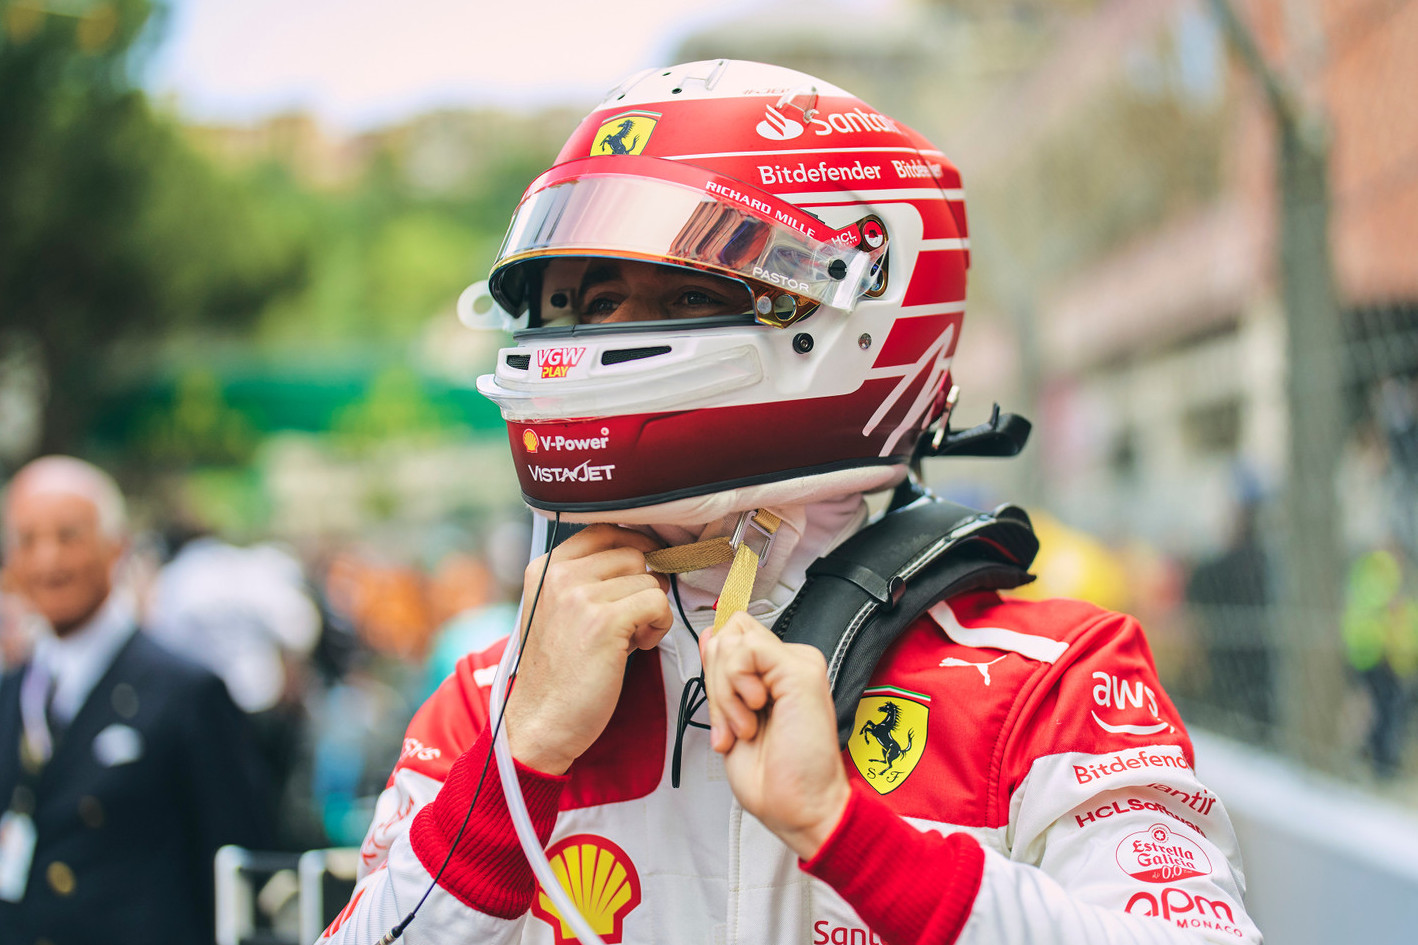 Leclerc Monaco helmet sets record price at Sotheby's auction